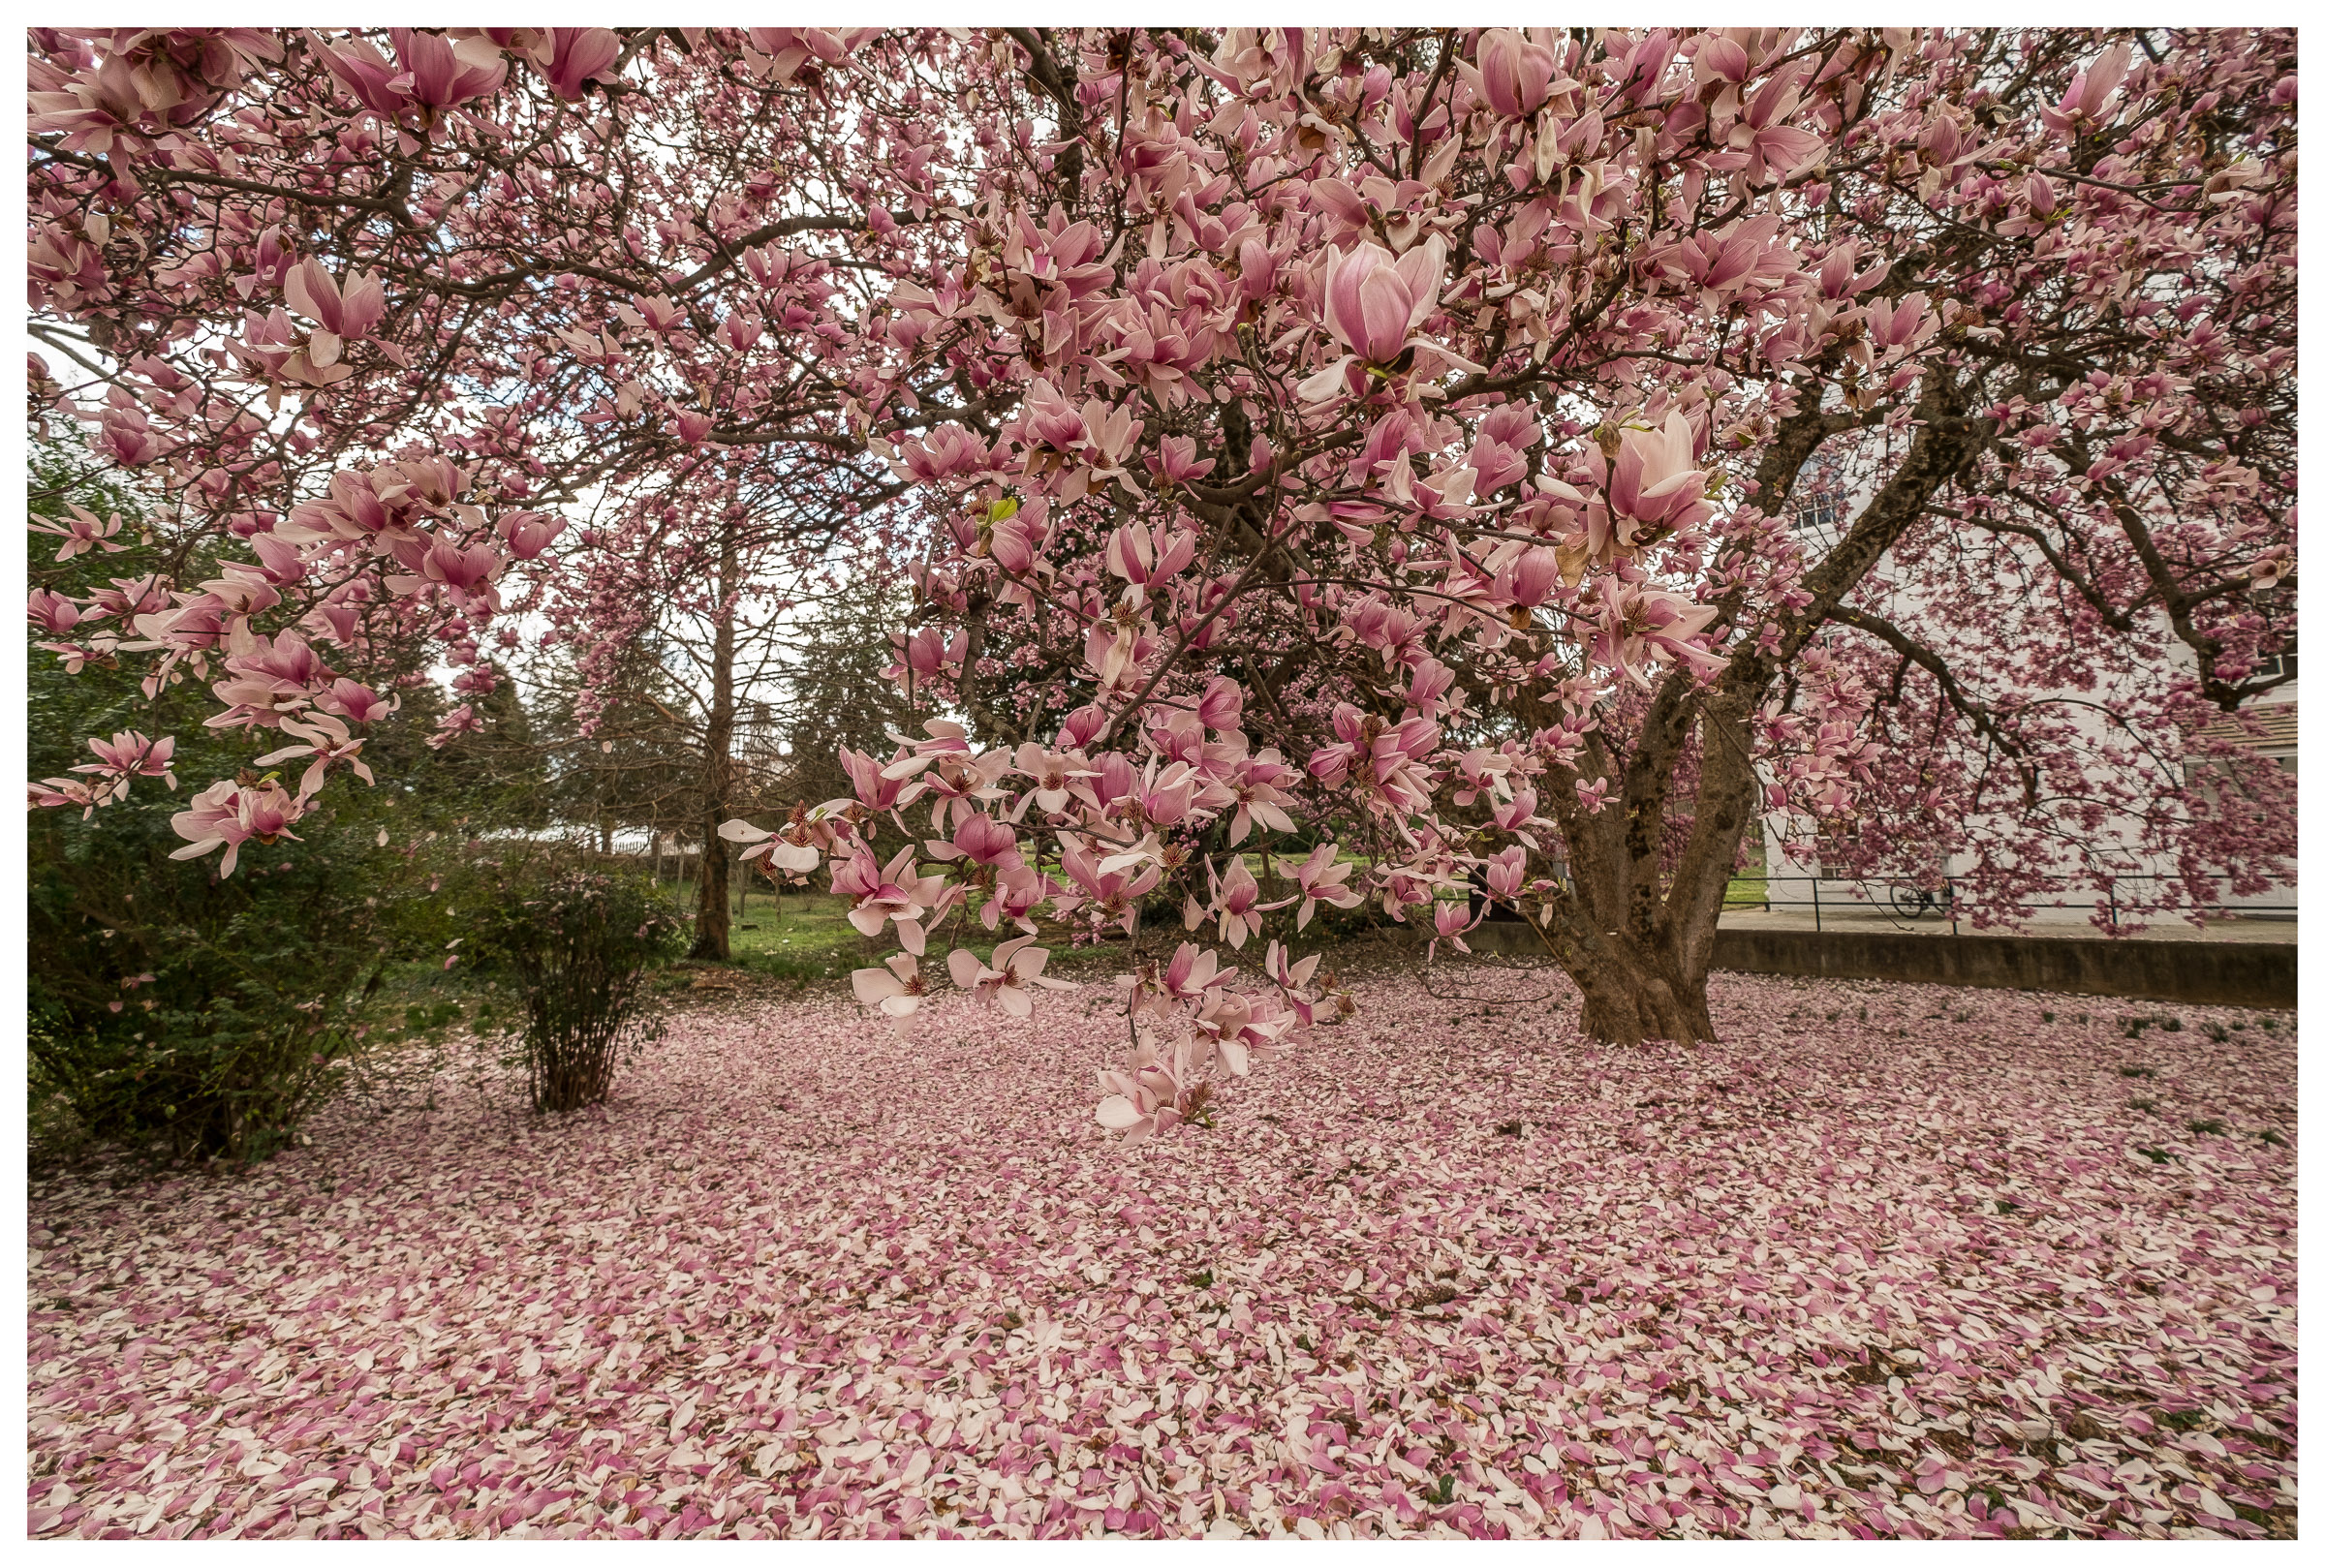 Magnificent flowering Magnolia tree in Old Salem